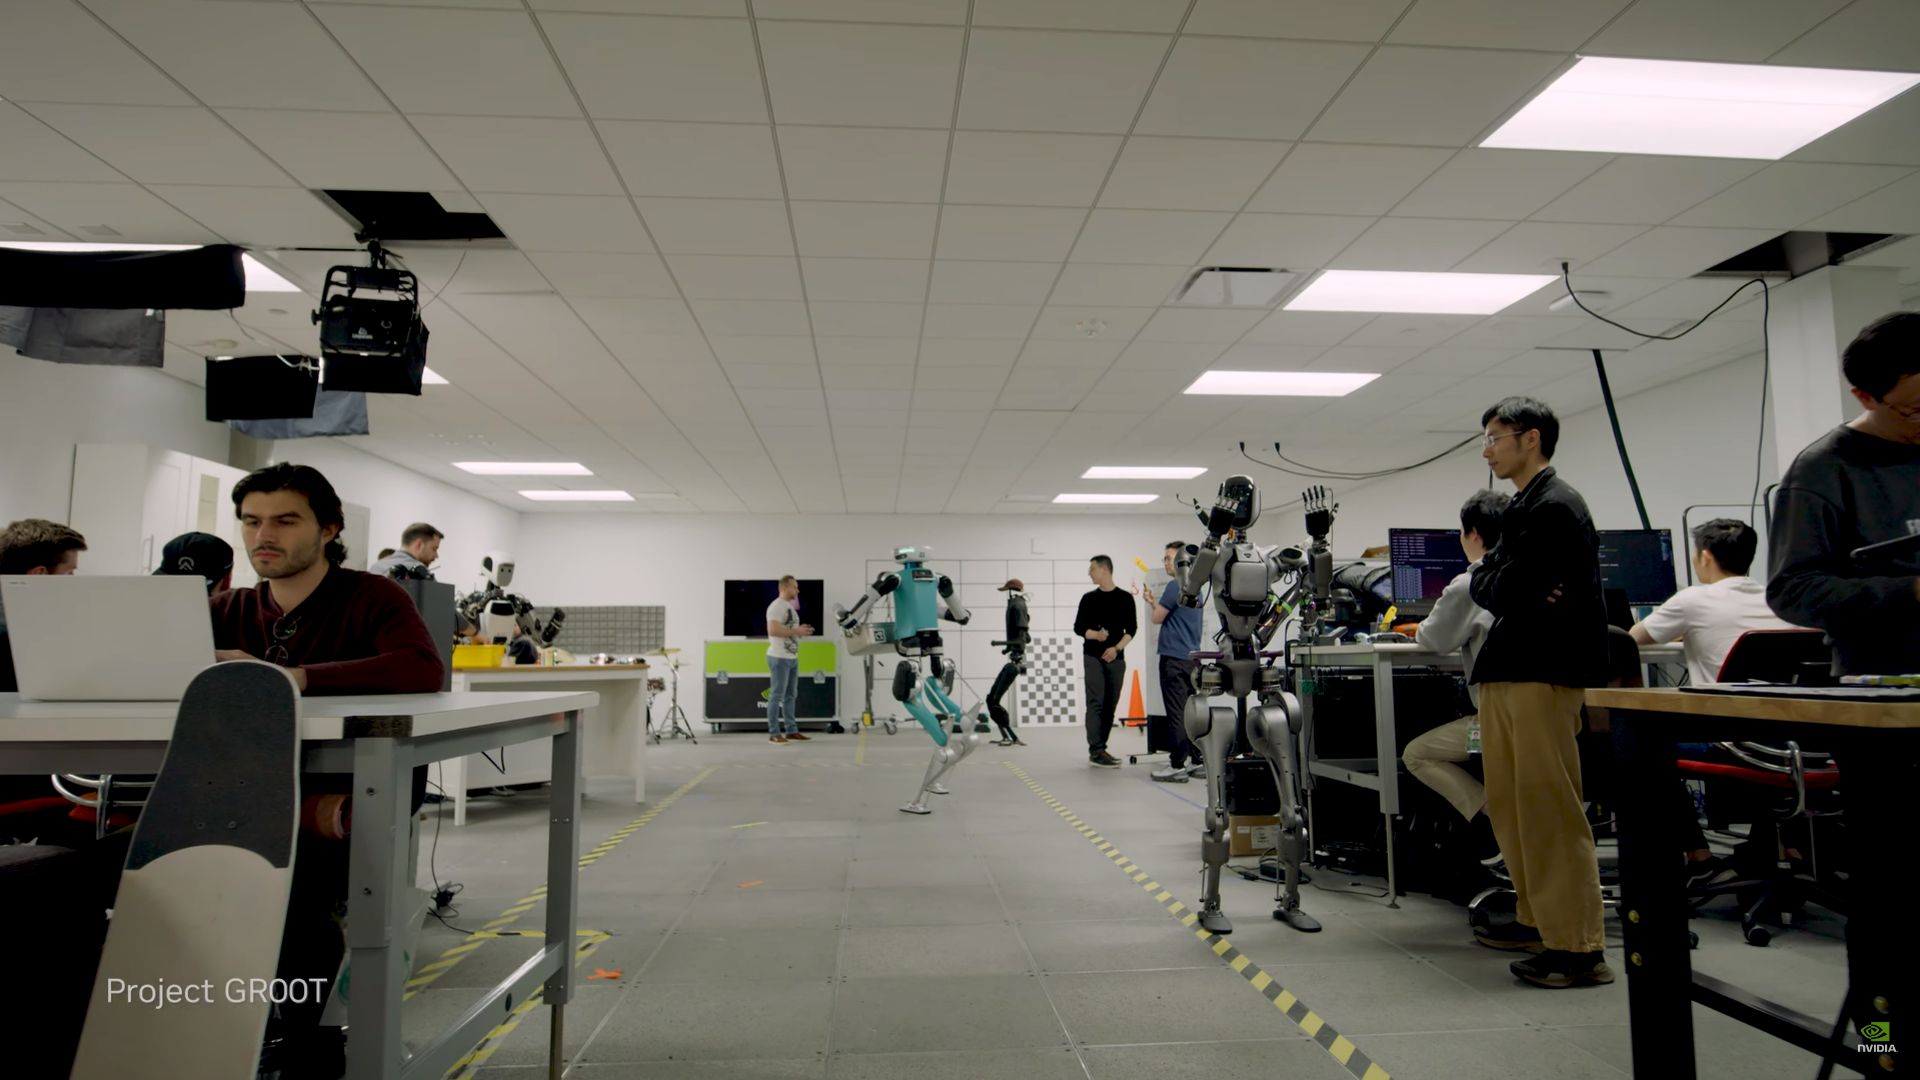 Nvidia'dan 3 yeni insansı robot projesi: Gr00t, Jetson Thor ve Isaac